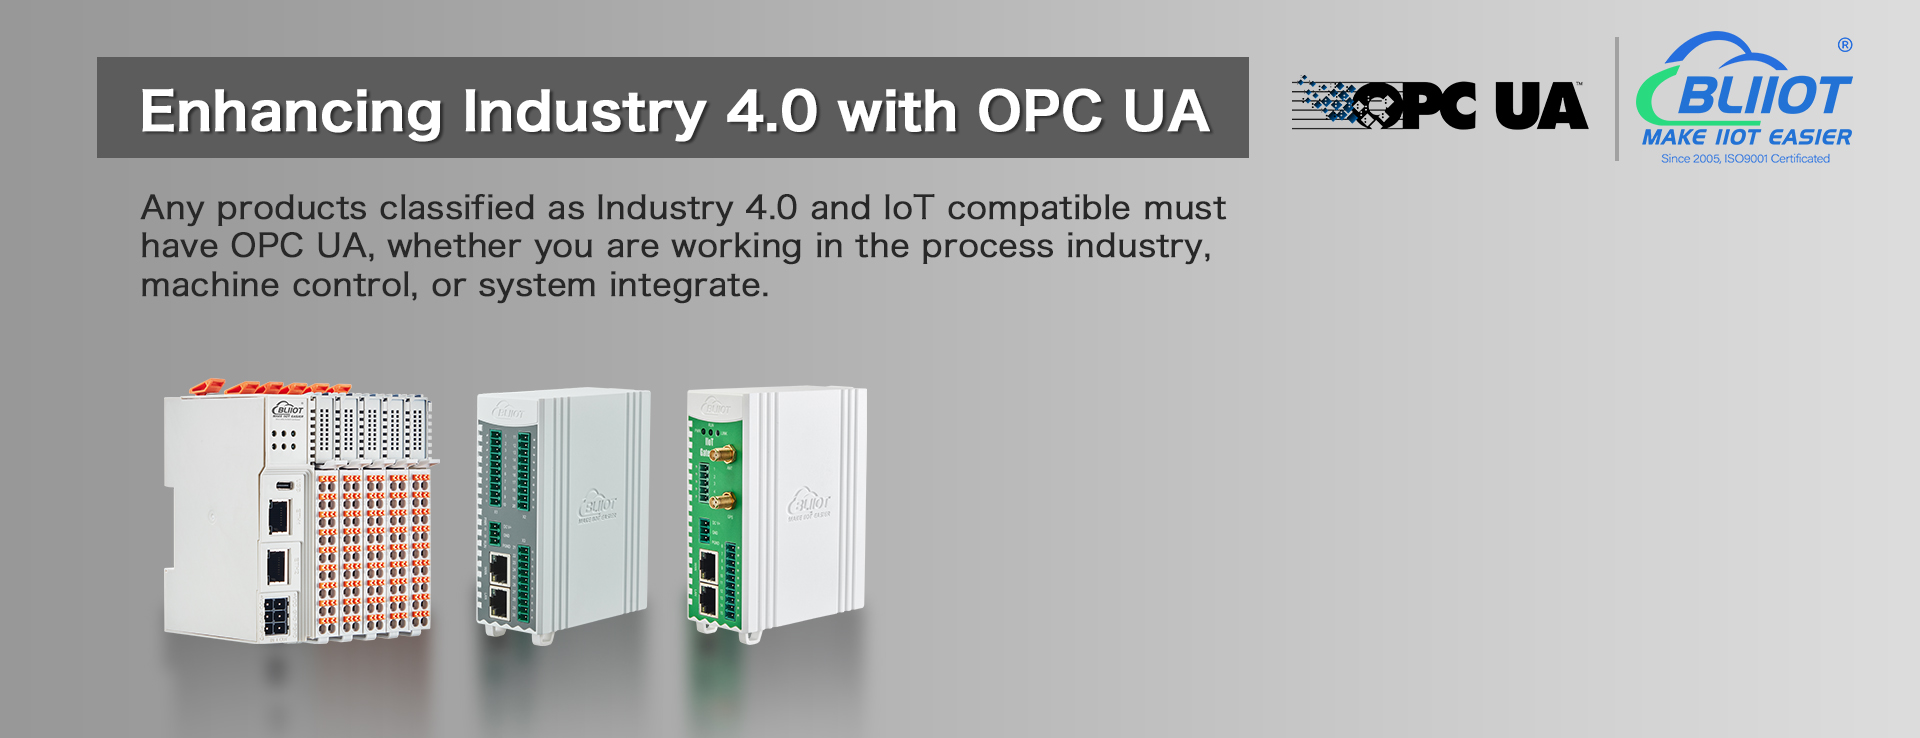 Enhancing Industry 4.0 with OPC UA